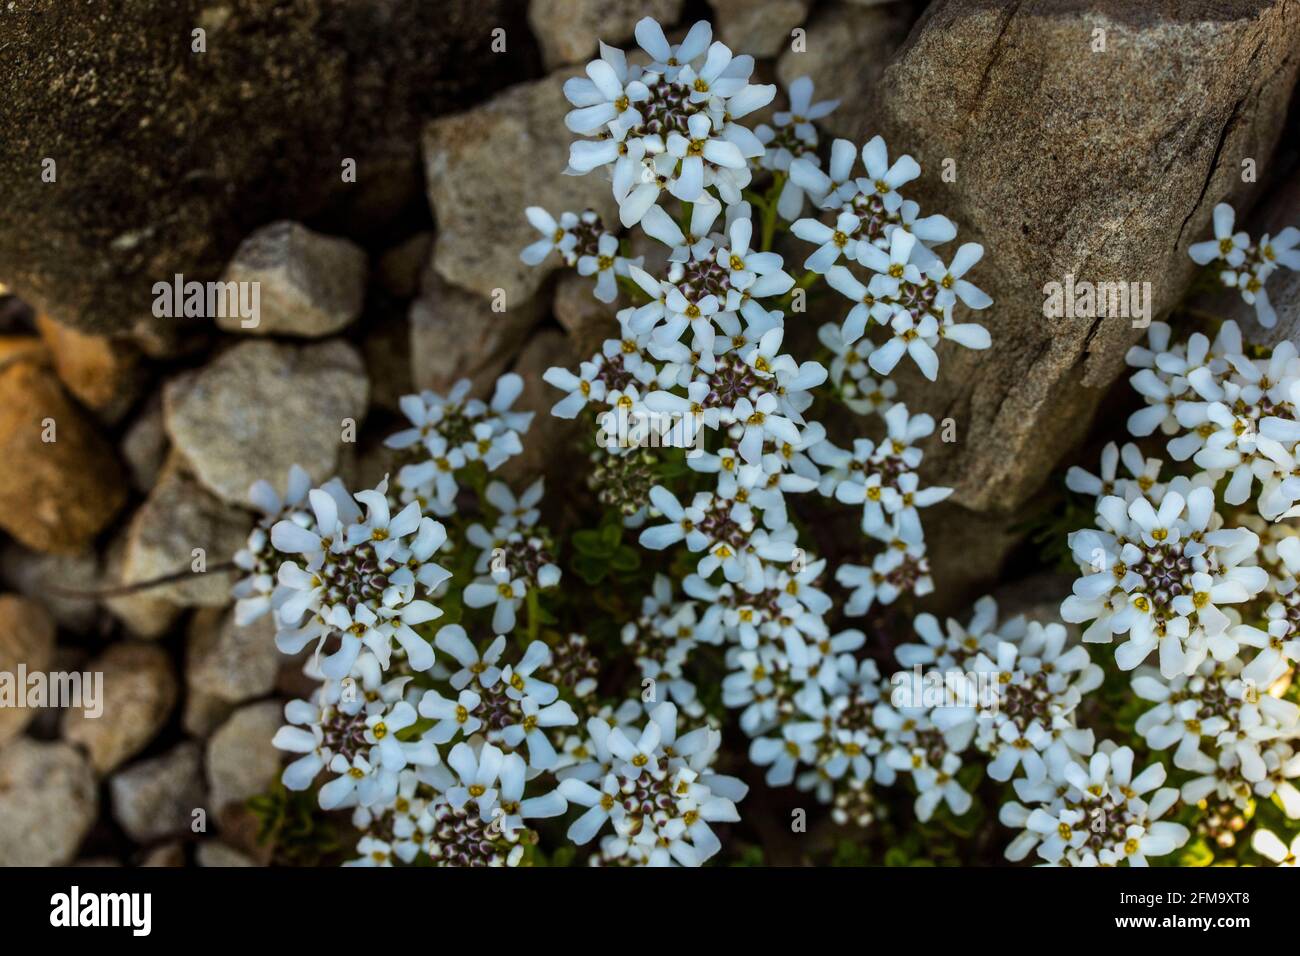 Iberis Saxatilis, alpine, candytuft, dwarf candytuft, in a rock garden setting Stock Photo